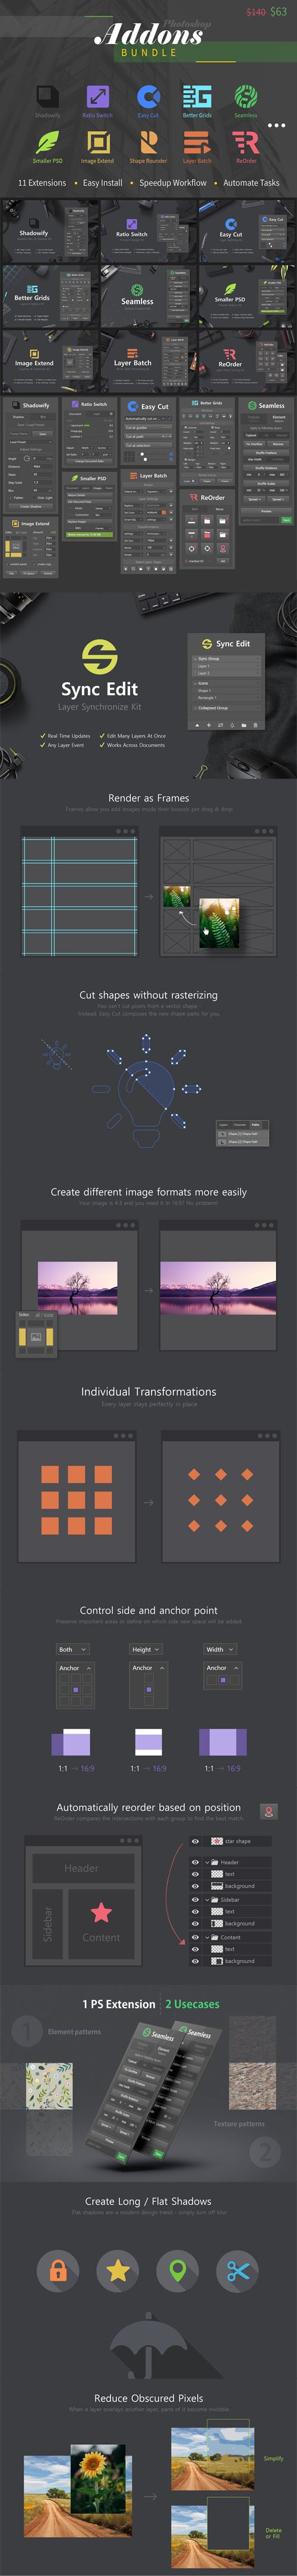 CreativeMarket - Photoshop Add-Ons ZXP Bundle